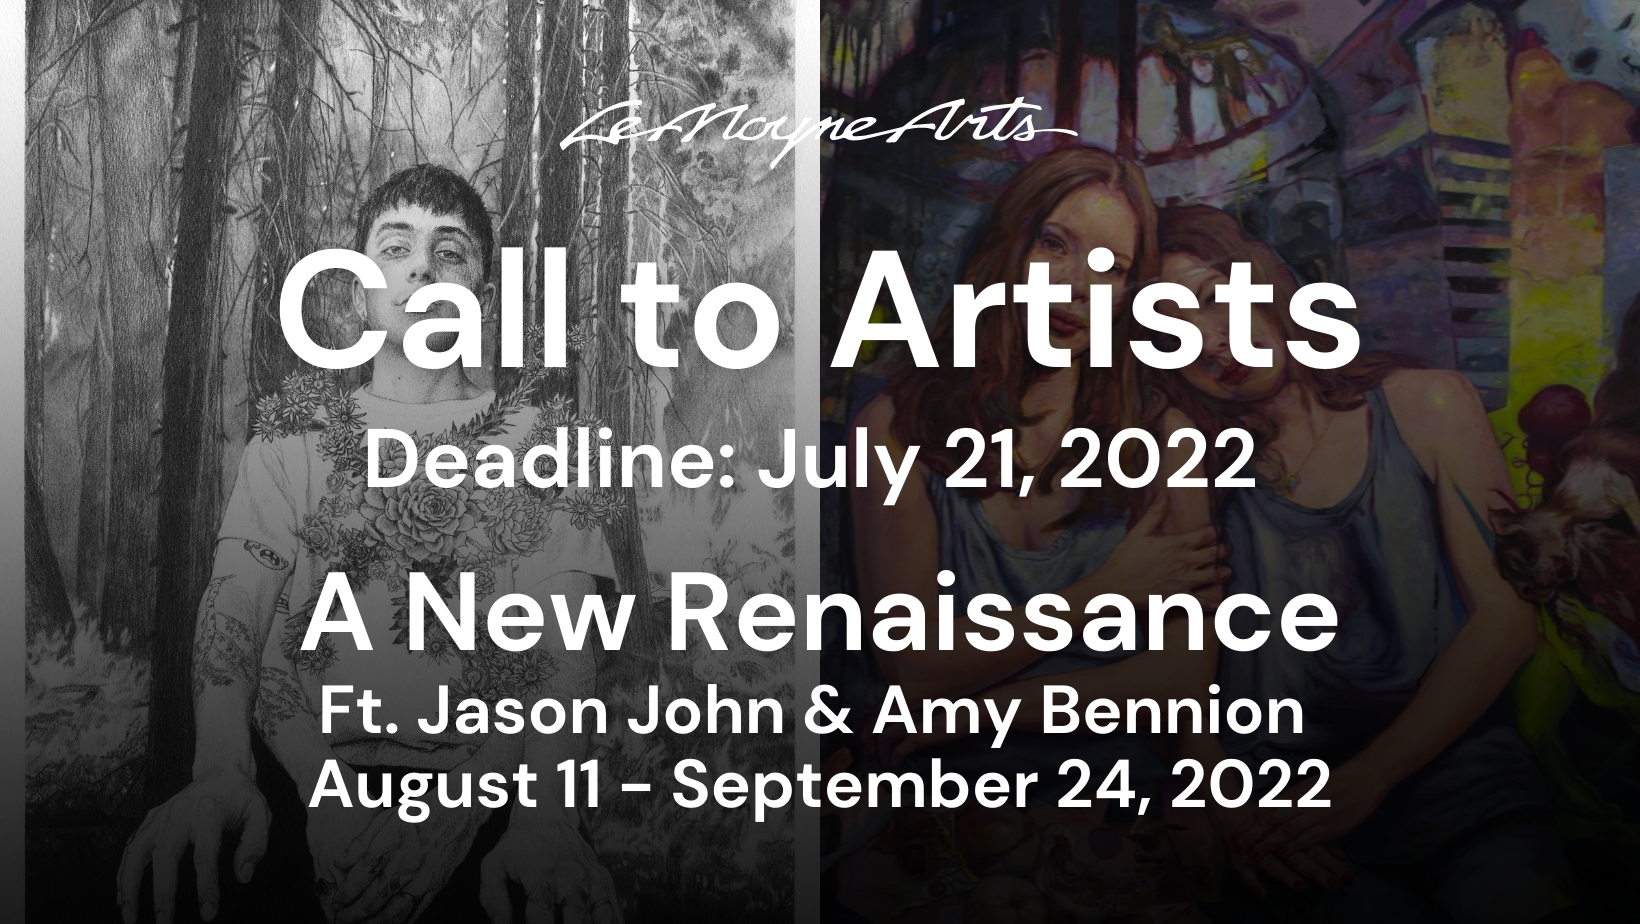 A New Renaissance, Featuring Jason John & Amy Bennion cover image